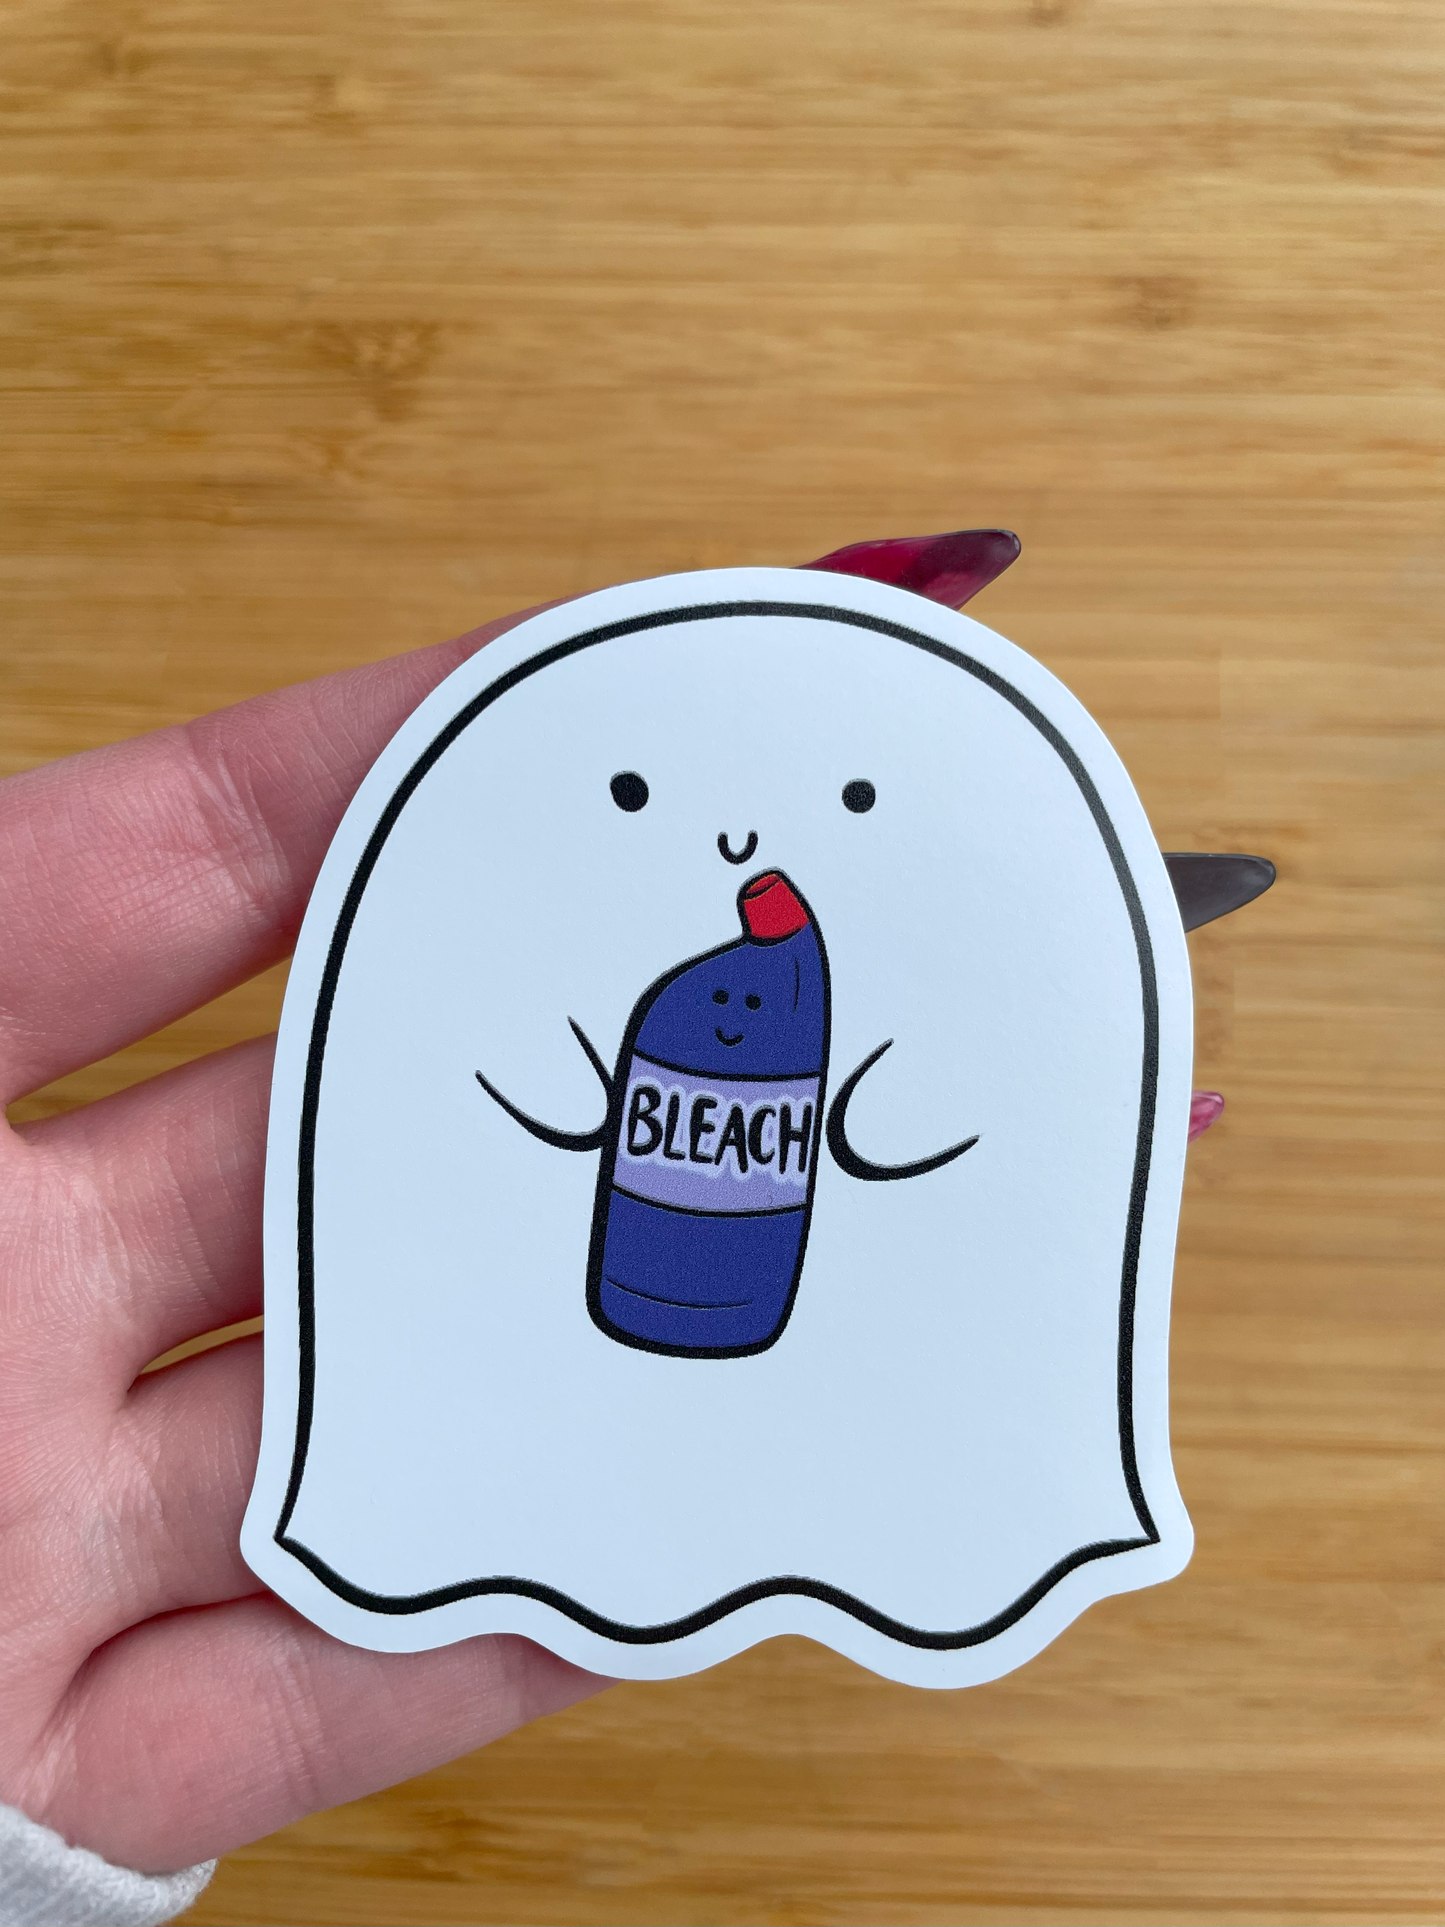 Bleach ghost die cut Matt vinyl sticker